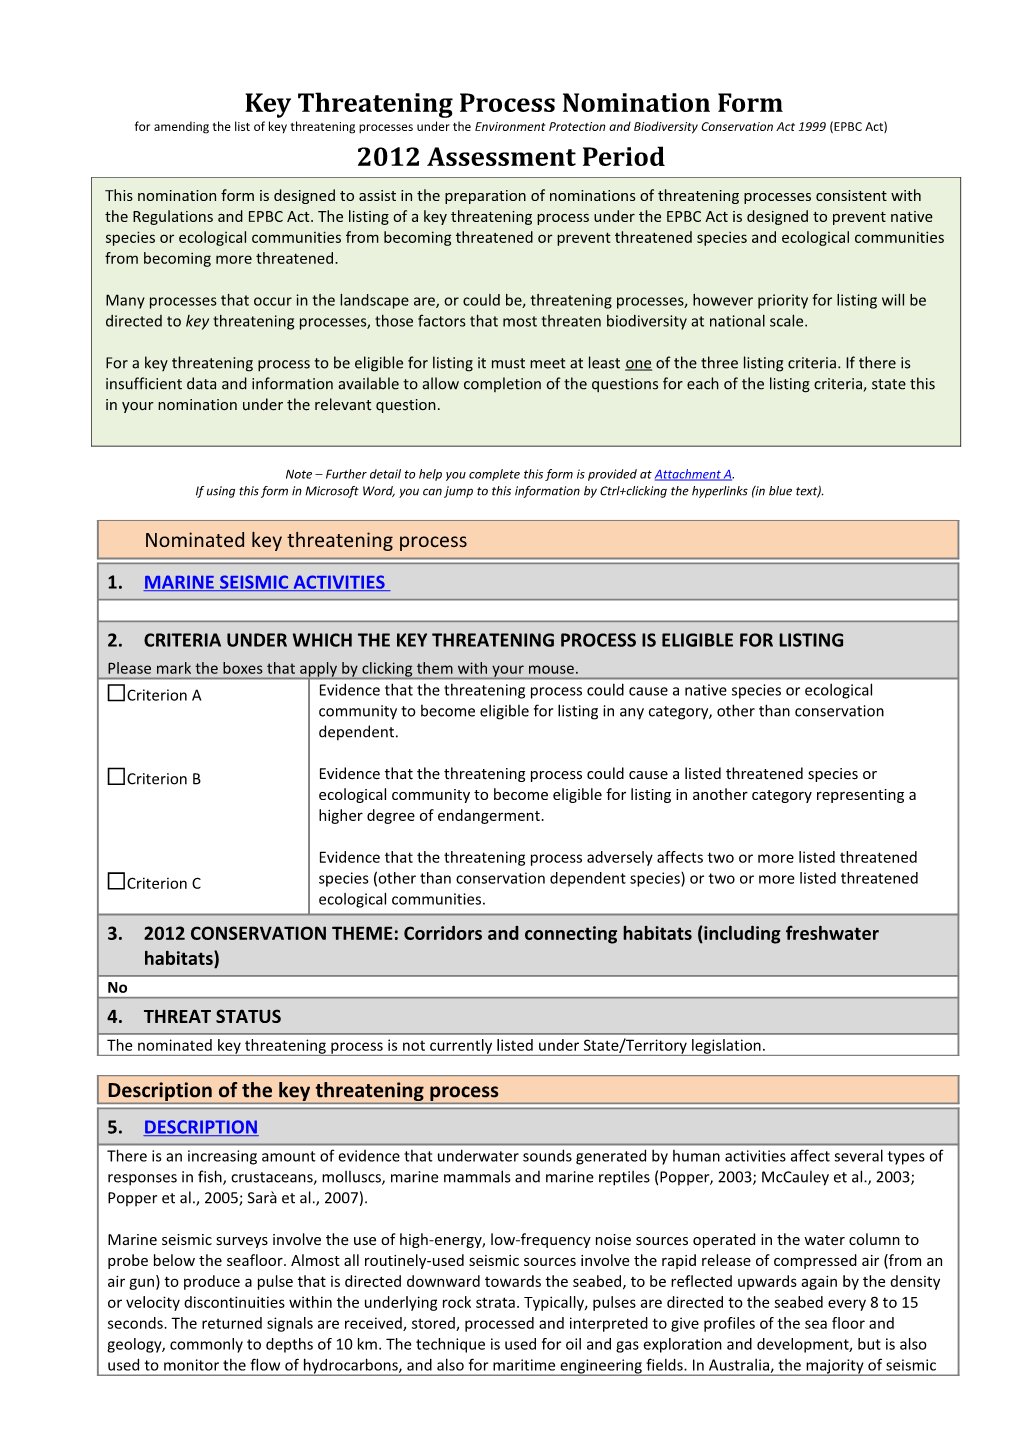 Key Threatening Process Nomination Form 2012 Assessment Period - Marine Seismic Activities